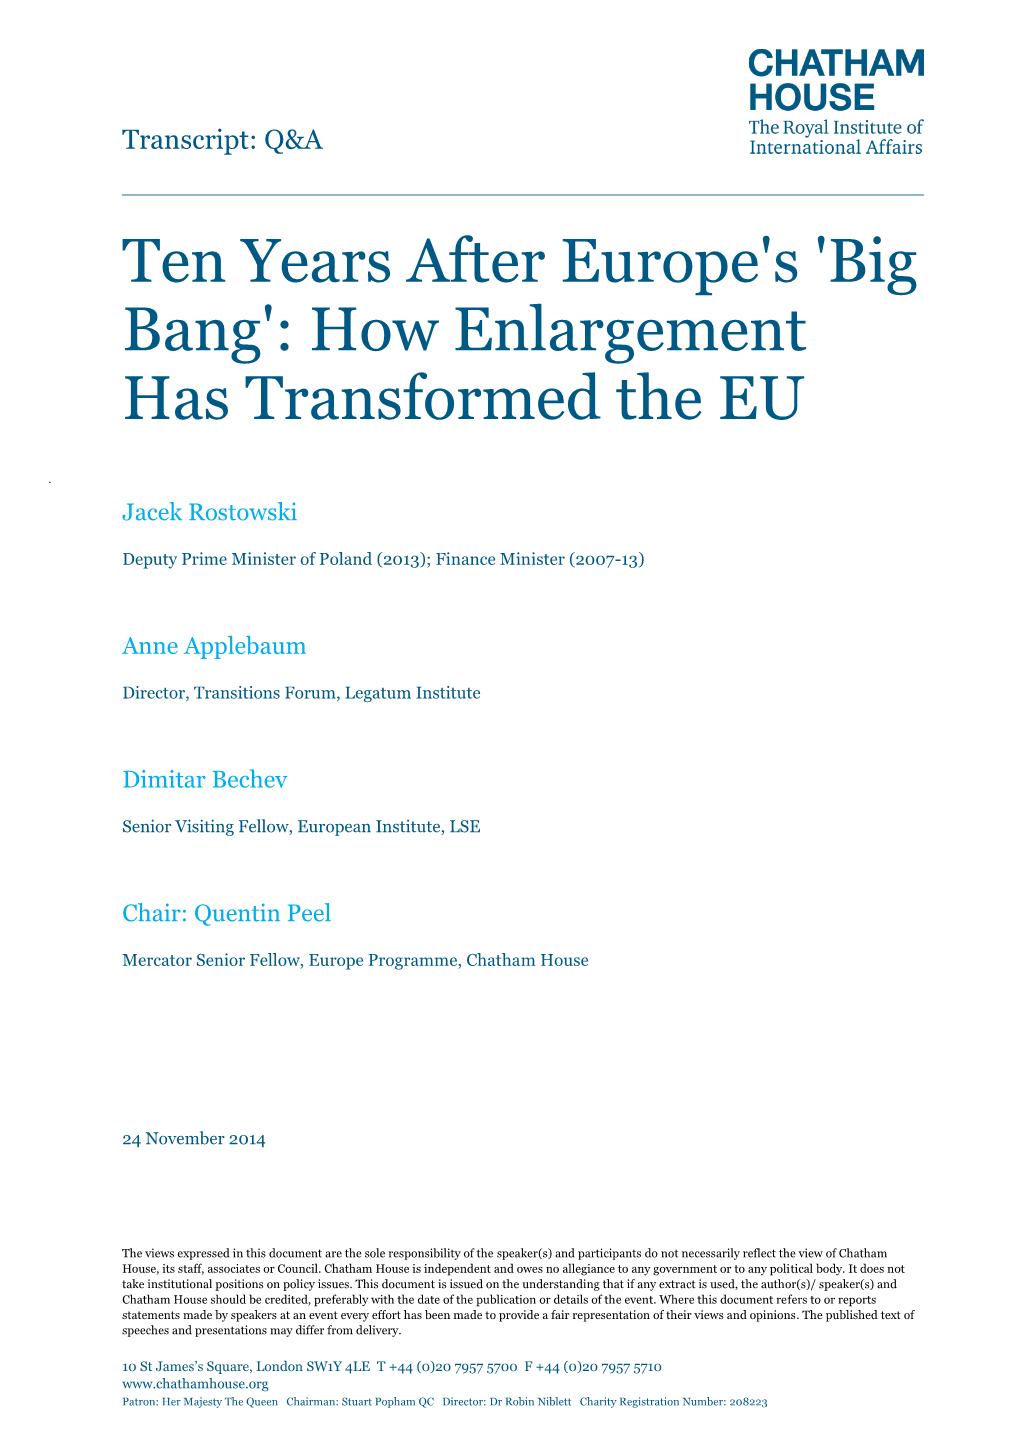 Ten Years After Europe's 'Big Bang': How Enlargement Has Transformed the EU